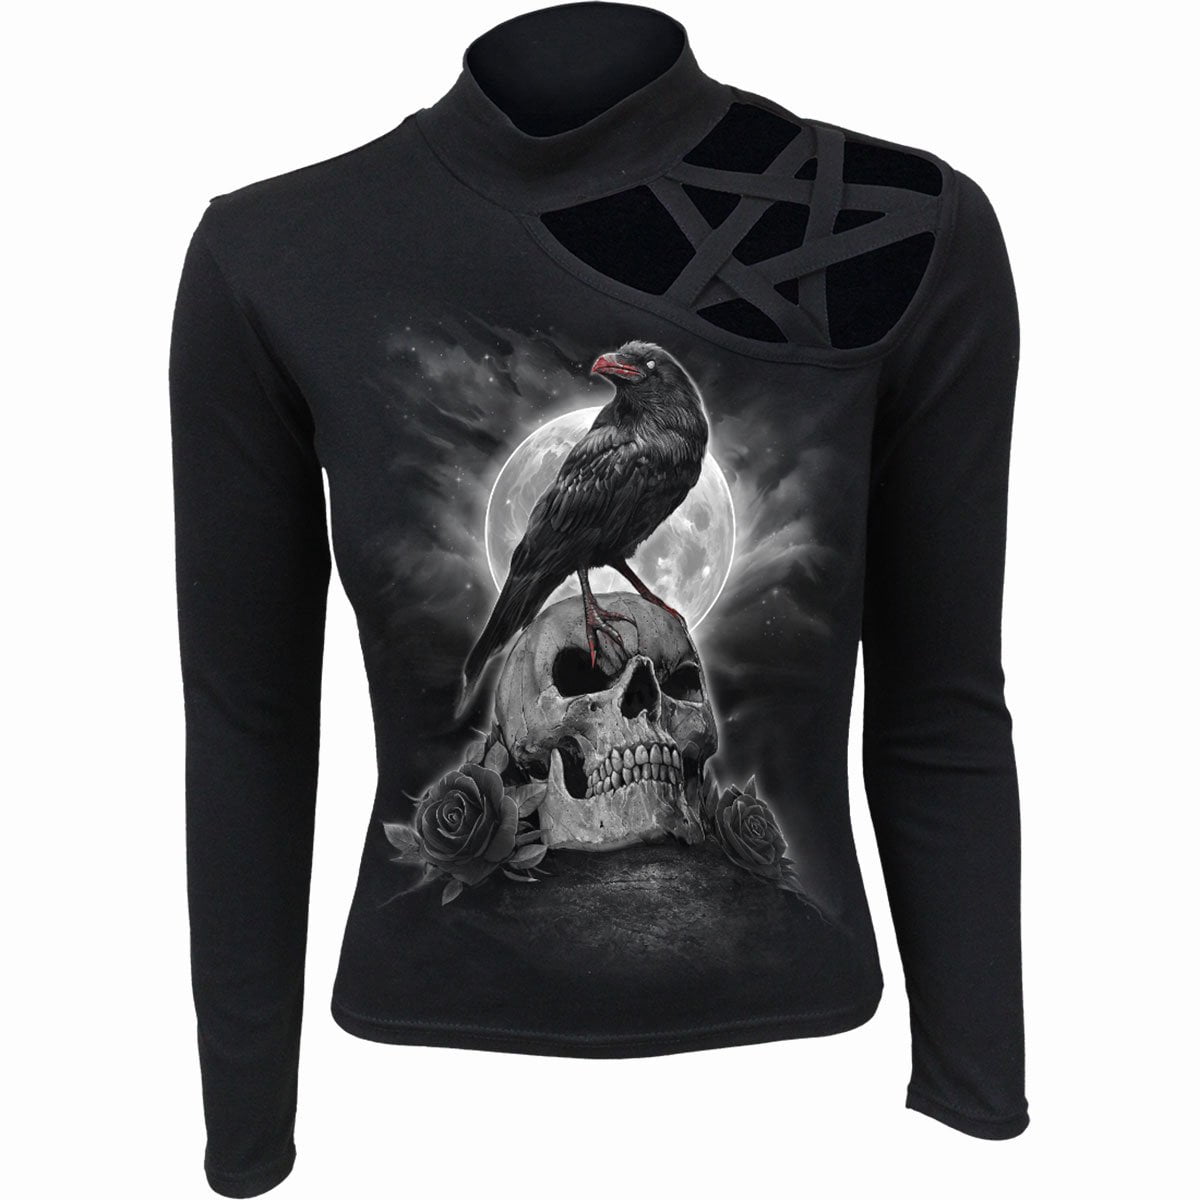 spiral Direct NEW DESIGNS Skull/Dragon/Reaper/Rock/Metal/Xmas/Gift/T shirt/Top